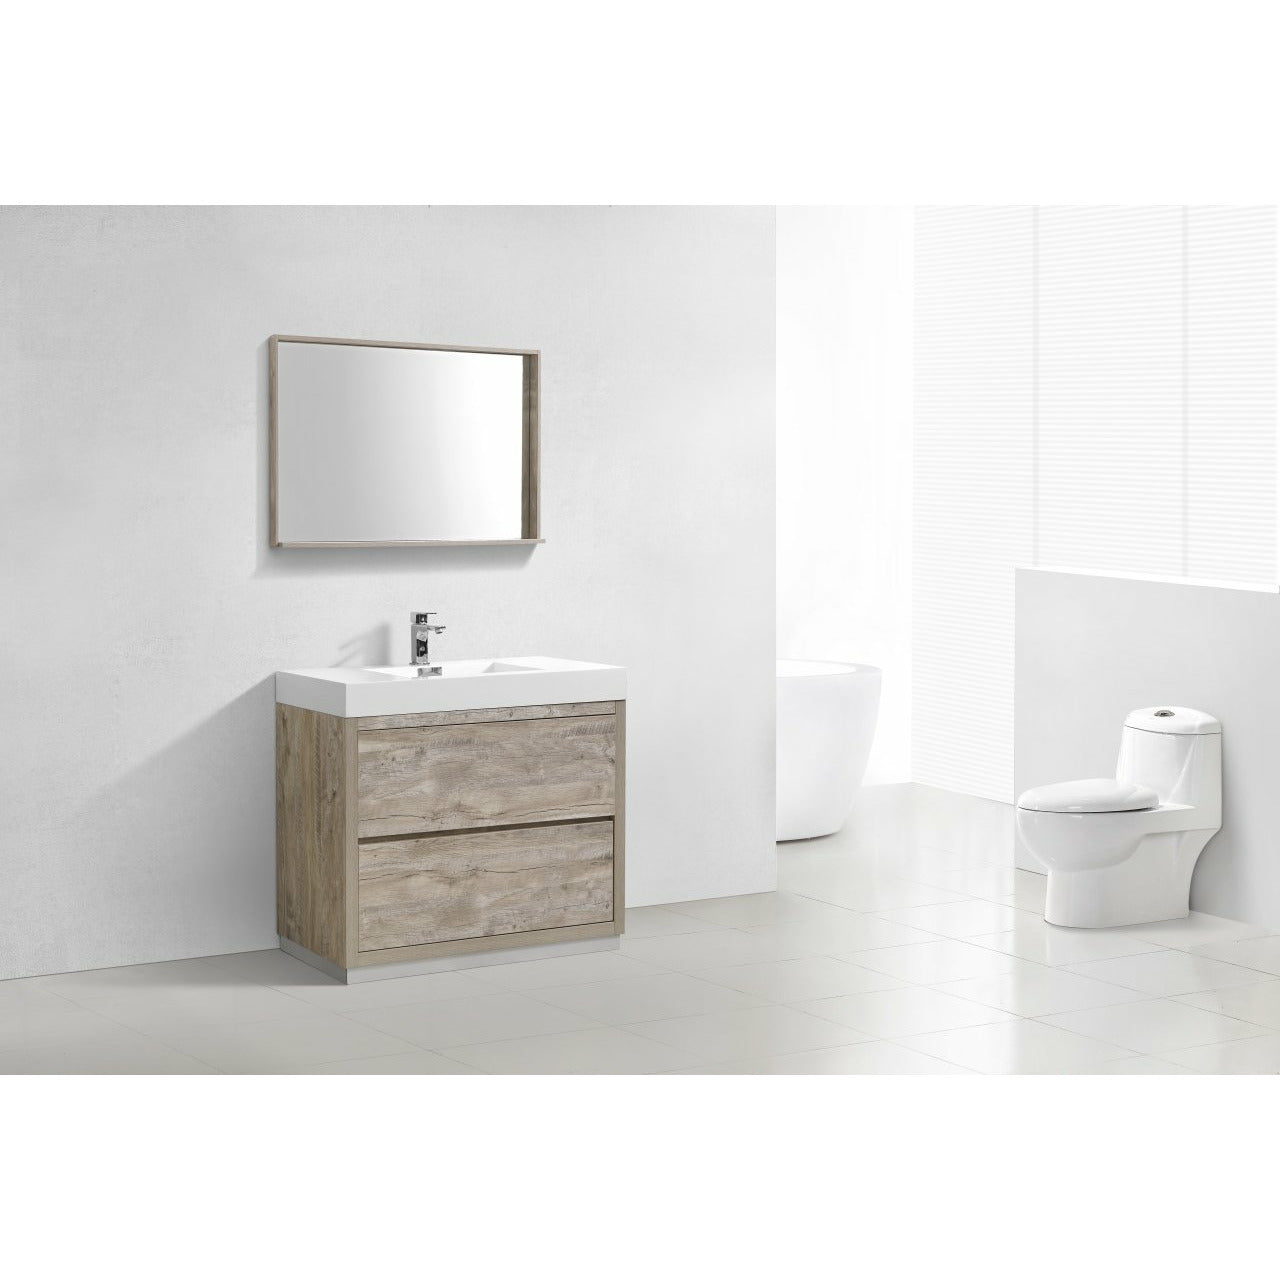 KubeBath Bliss Single Free Standing Modern Bathroom Vanity